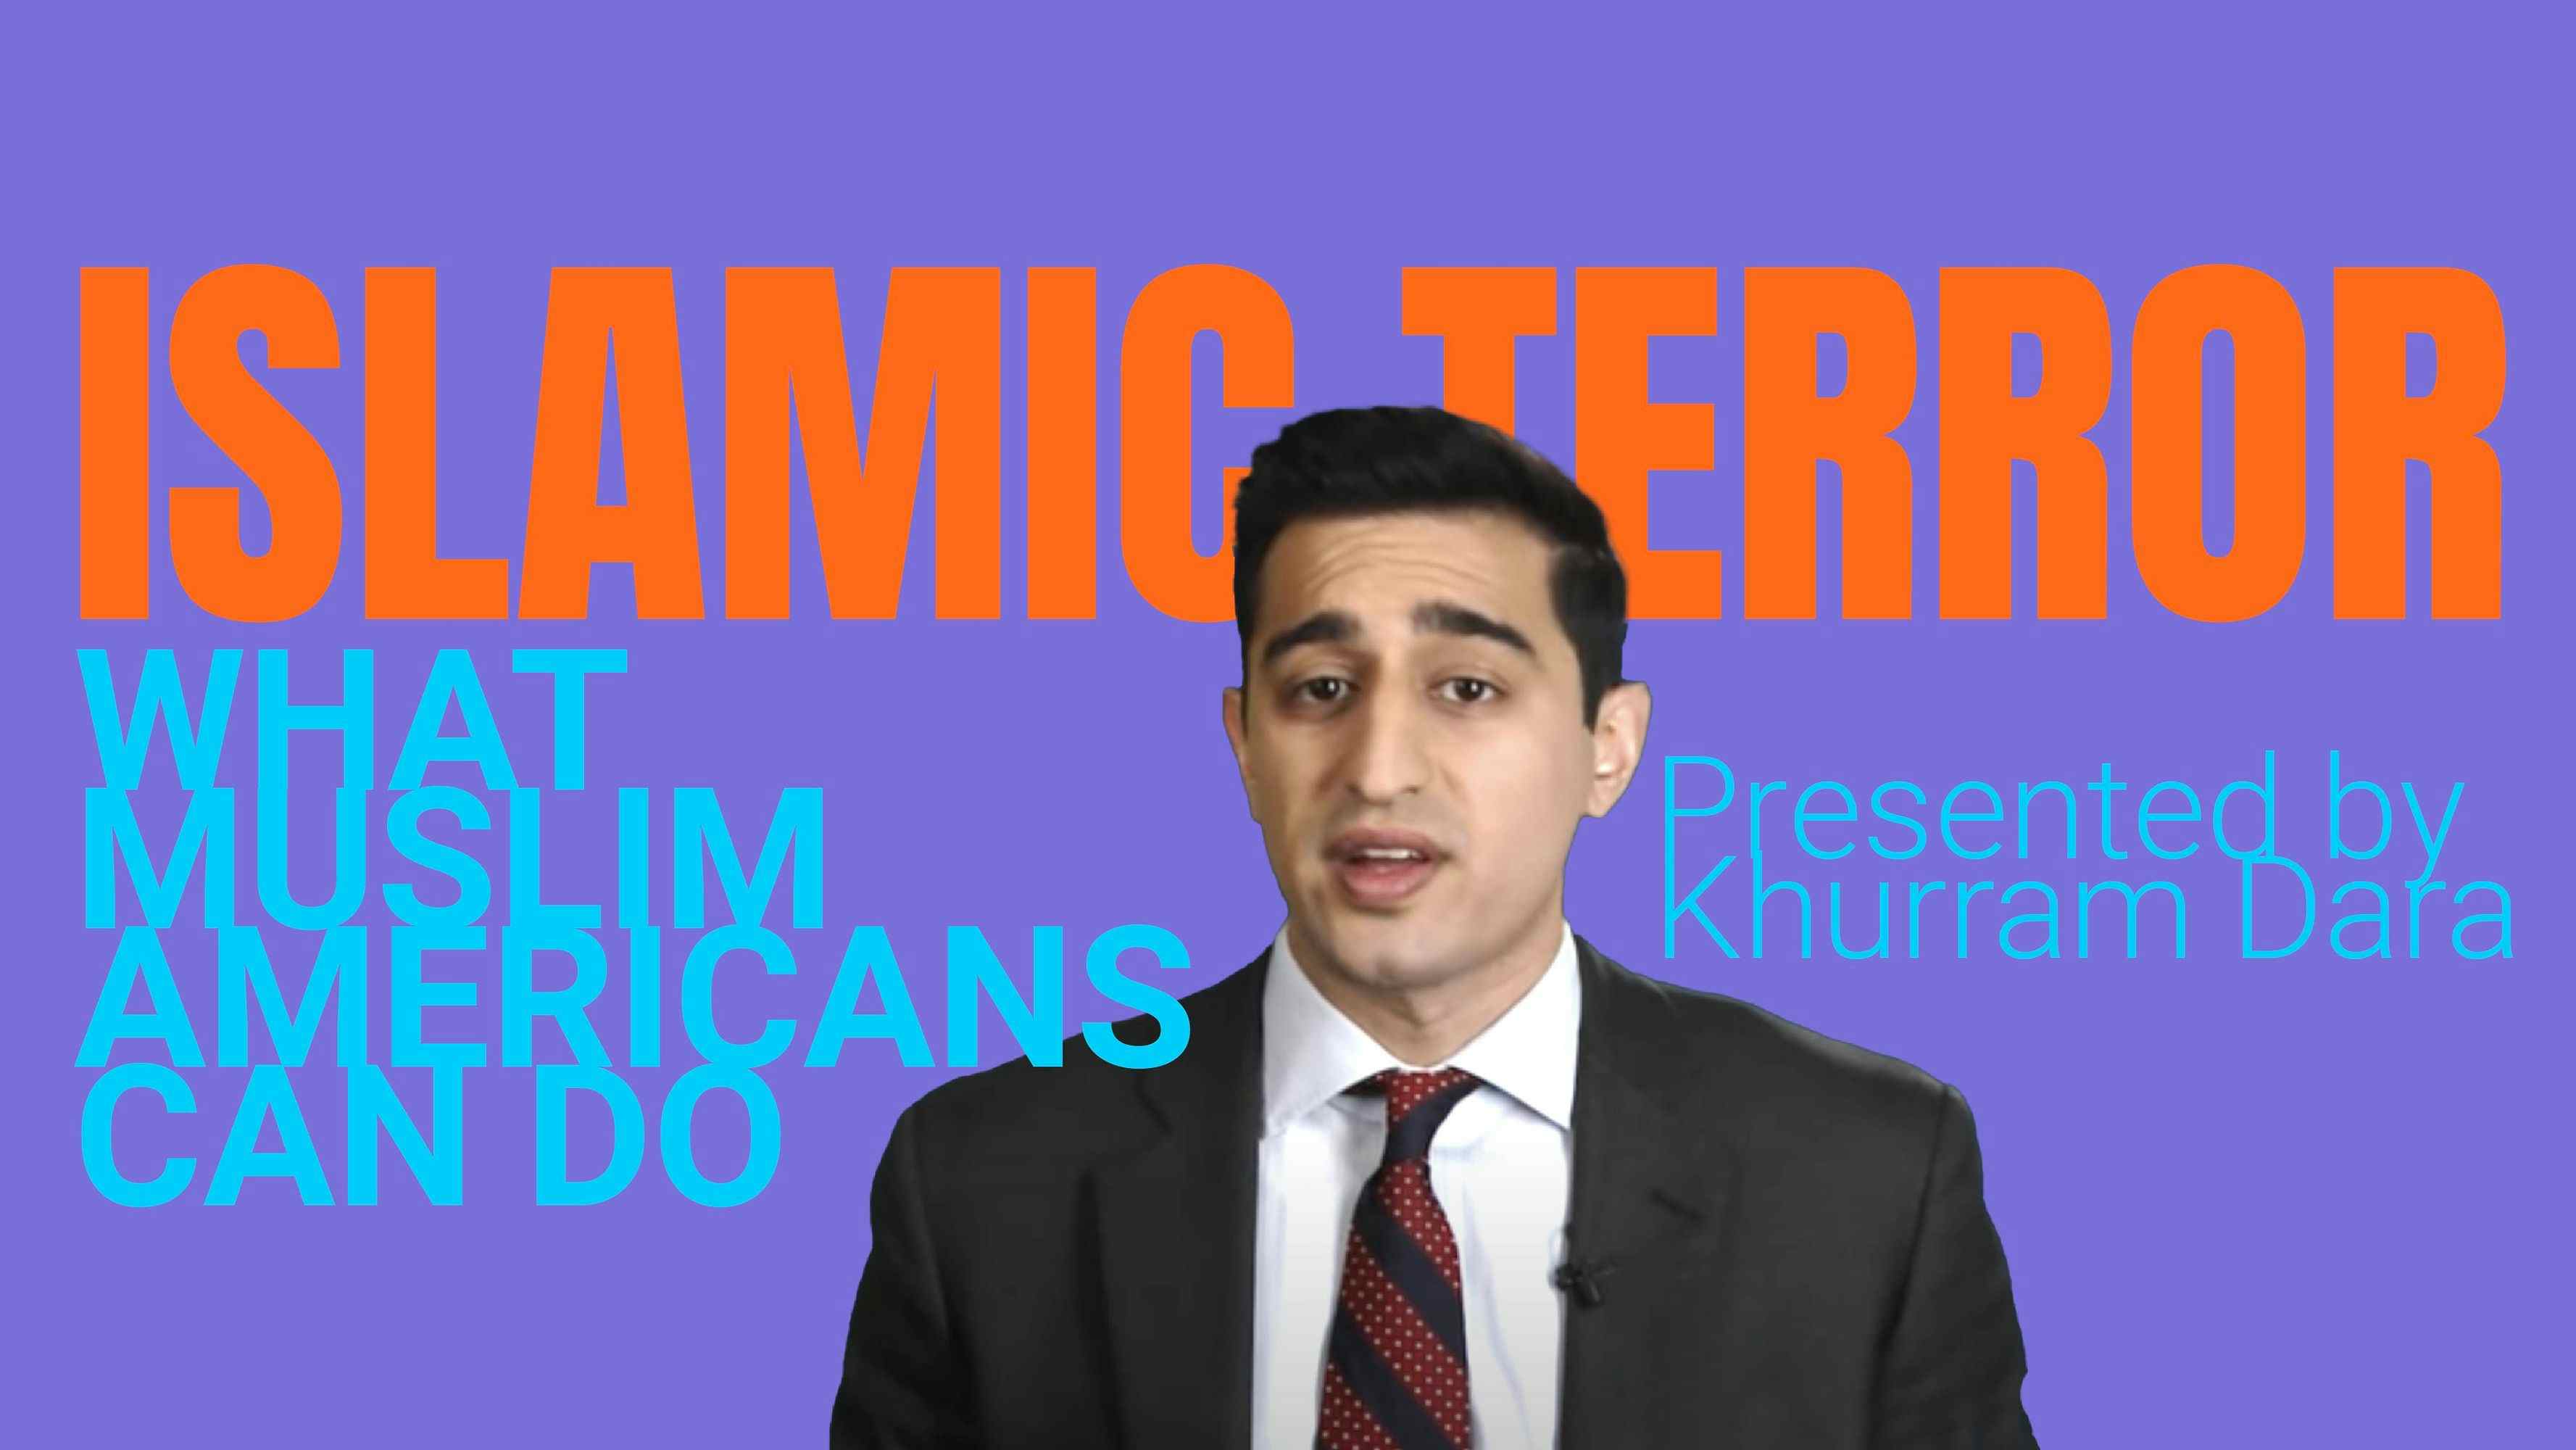 Islamic Terror: What Muslim Americans Can Do